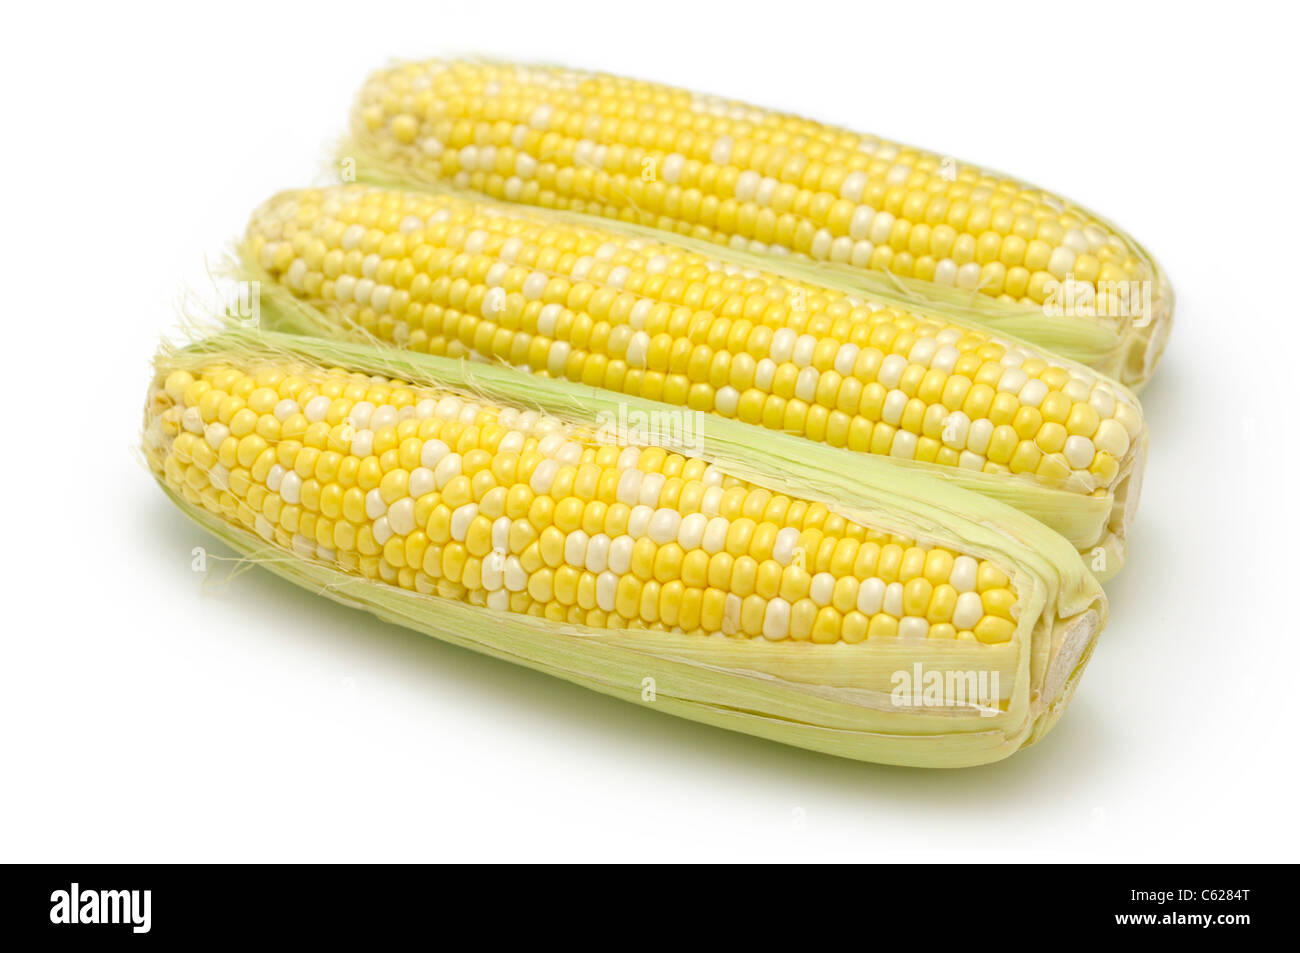 Maize / Corn on the Cob Stock Photo